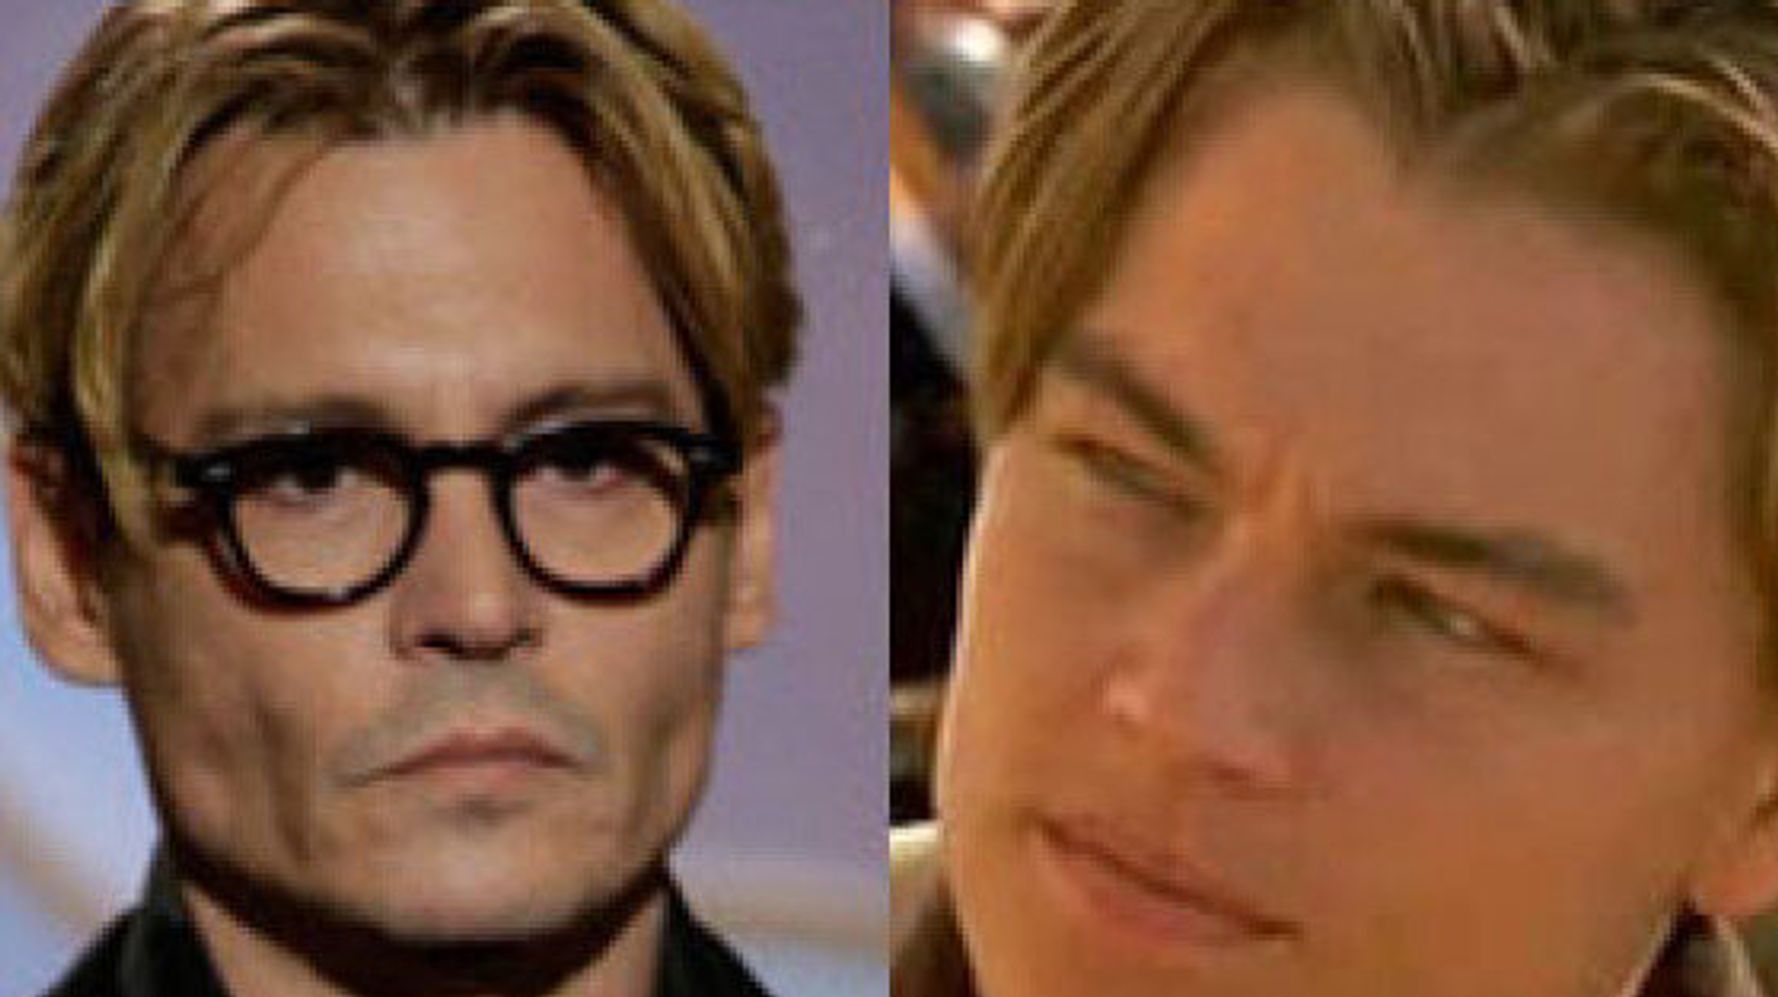 Johnny Depp's Golden Globes 2014 Hair Looks Like Leonardo DiCaprio's In ' Titanic' (PHOTOS) | HuffPost Style